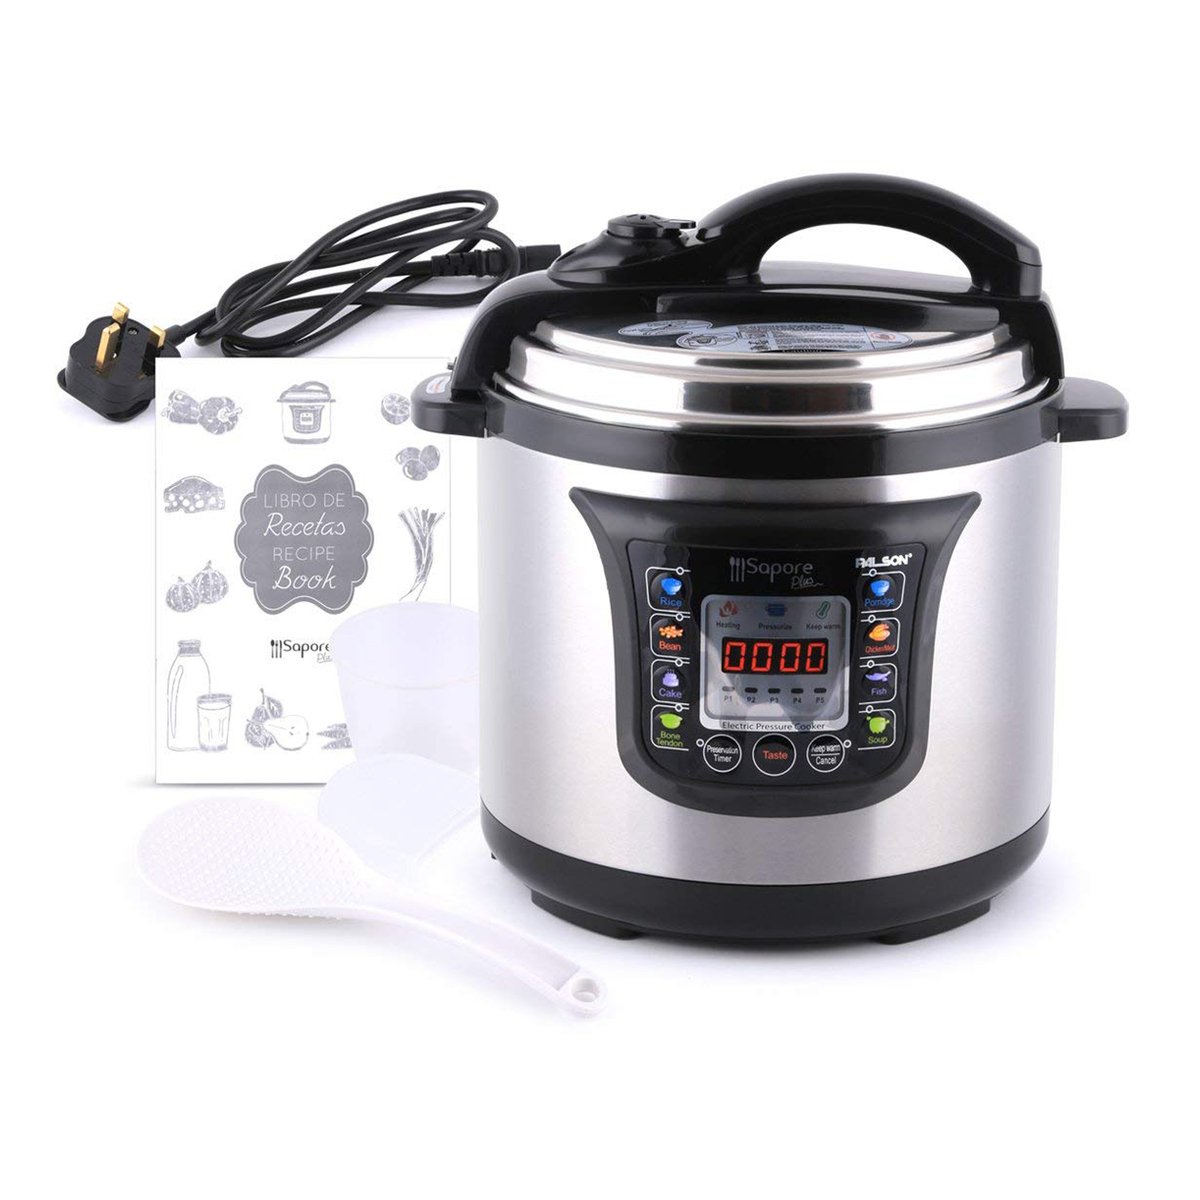 Palson Electric Pressure Cooker 30997 Sapore Plus 8Ltr